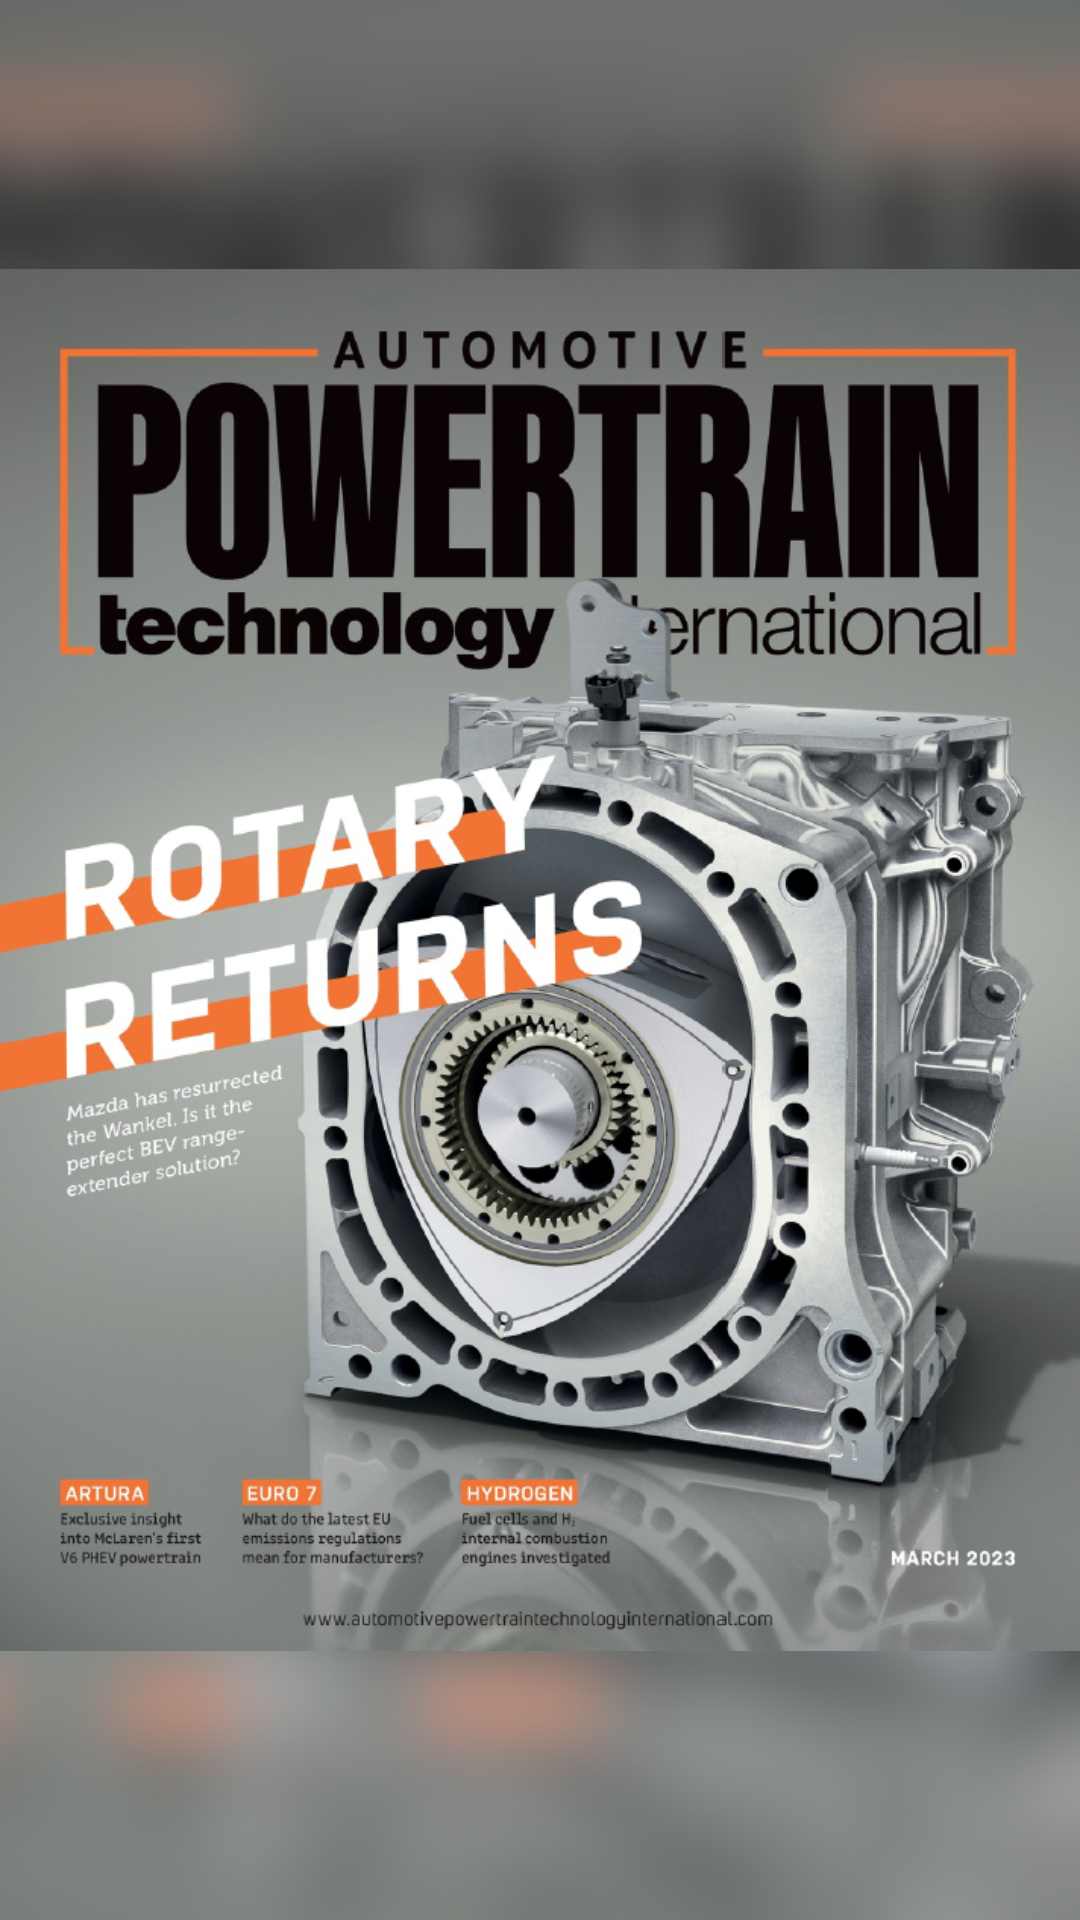 Automotive Powertrain Technology International March 2023 magazine 'Rotary Returns' front cover.